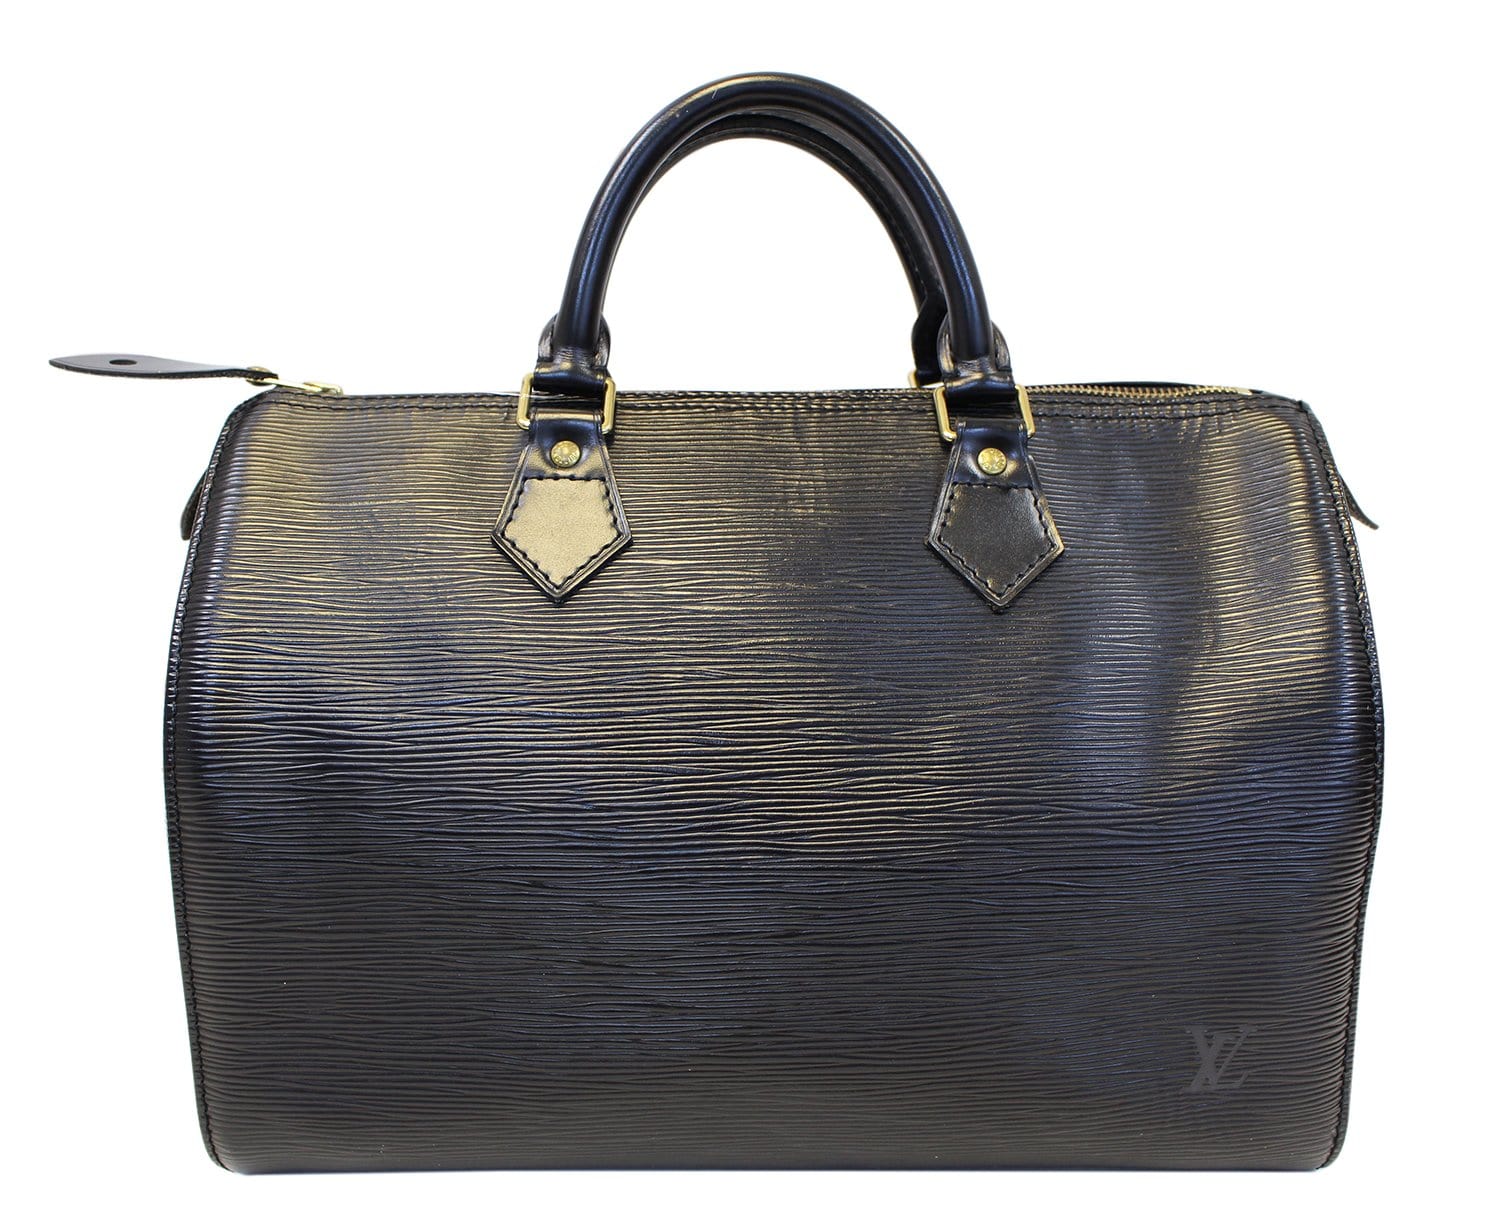 Louis Vuitton 2012 pre-owned Speedy 30 bag, Black